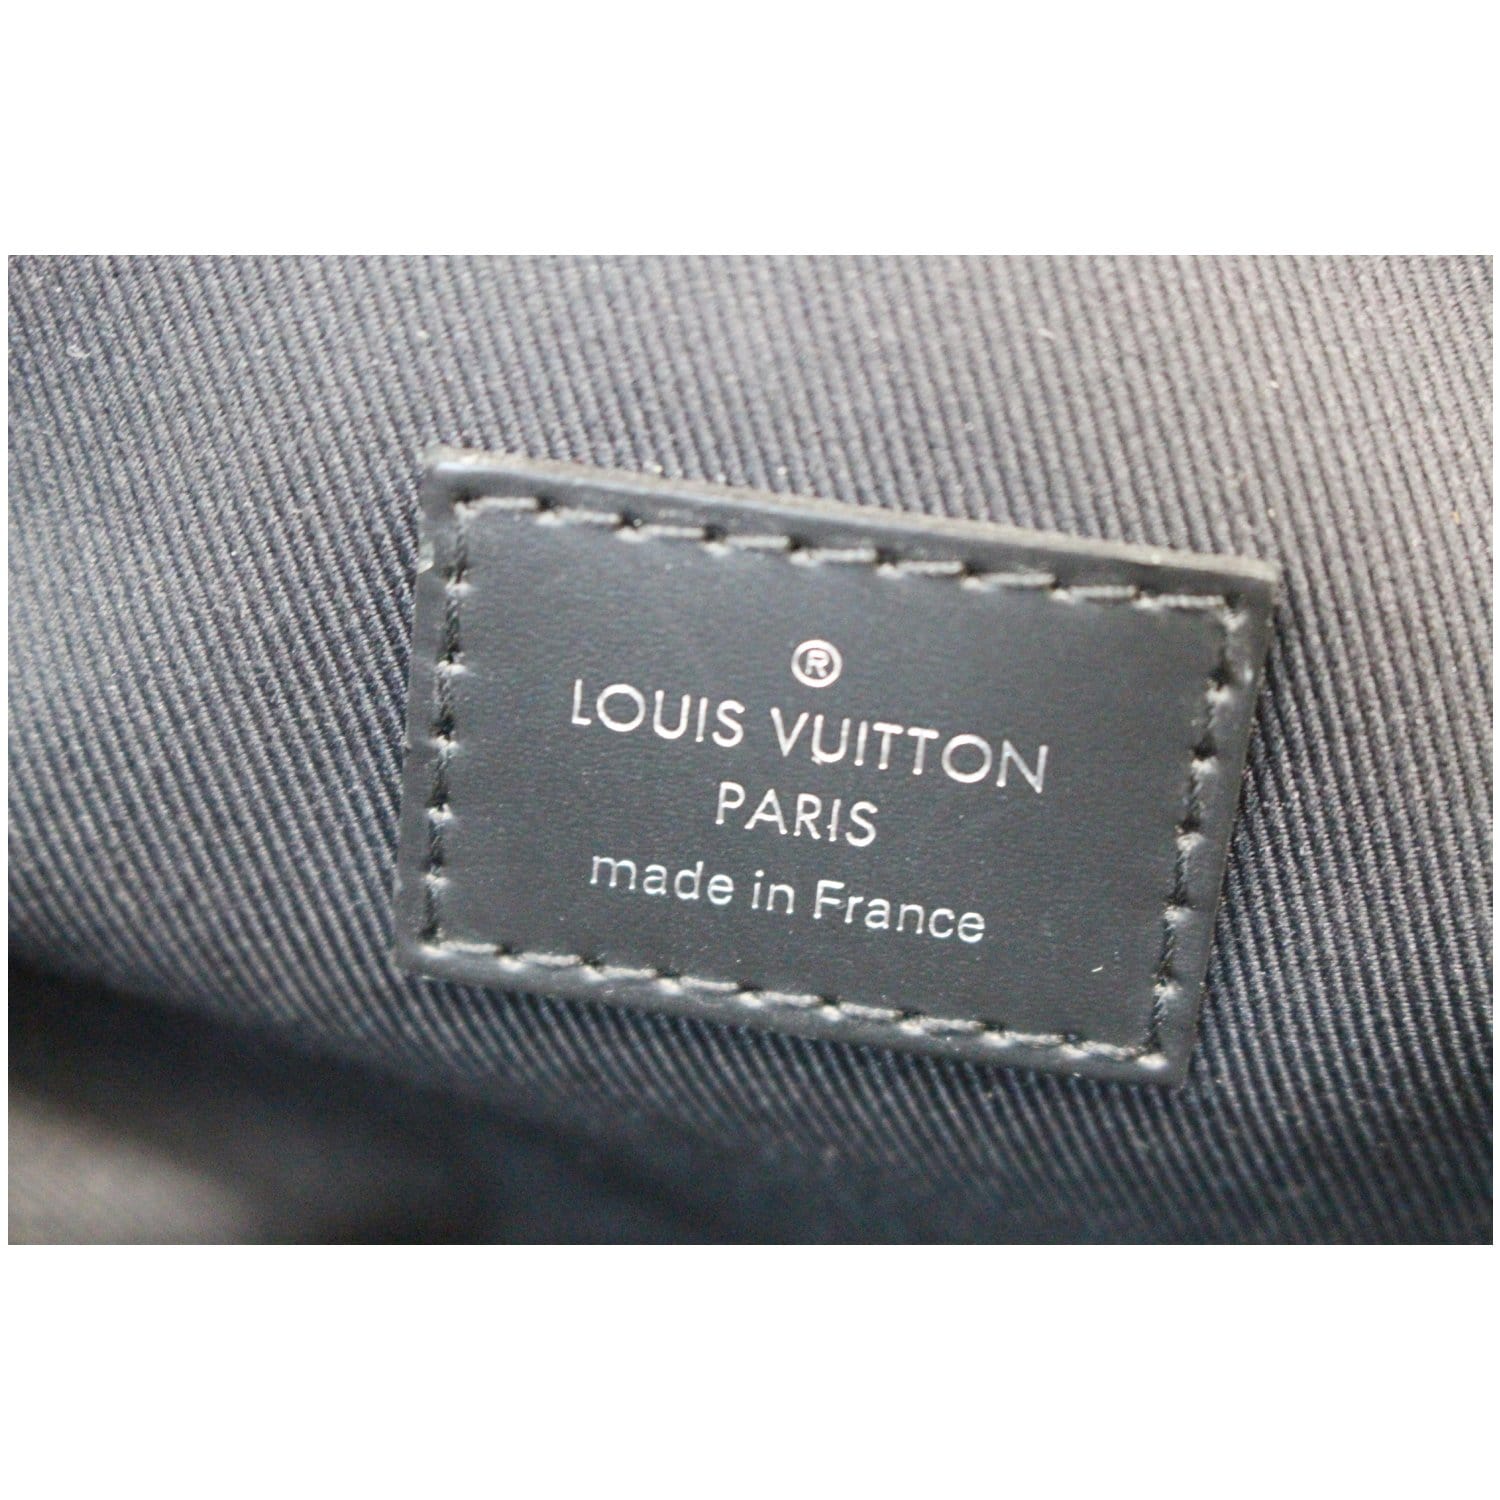 Lv Sling  Lv sling, Vuitton, Louis vuitton bag